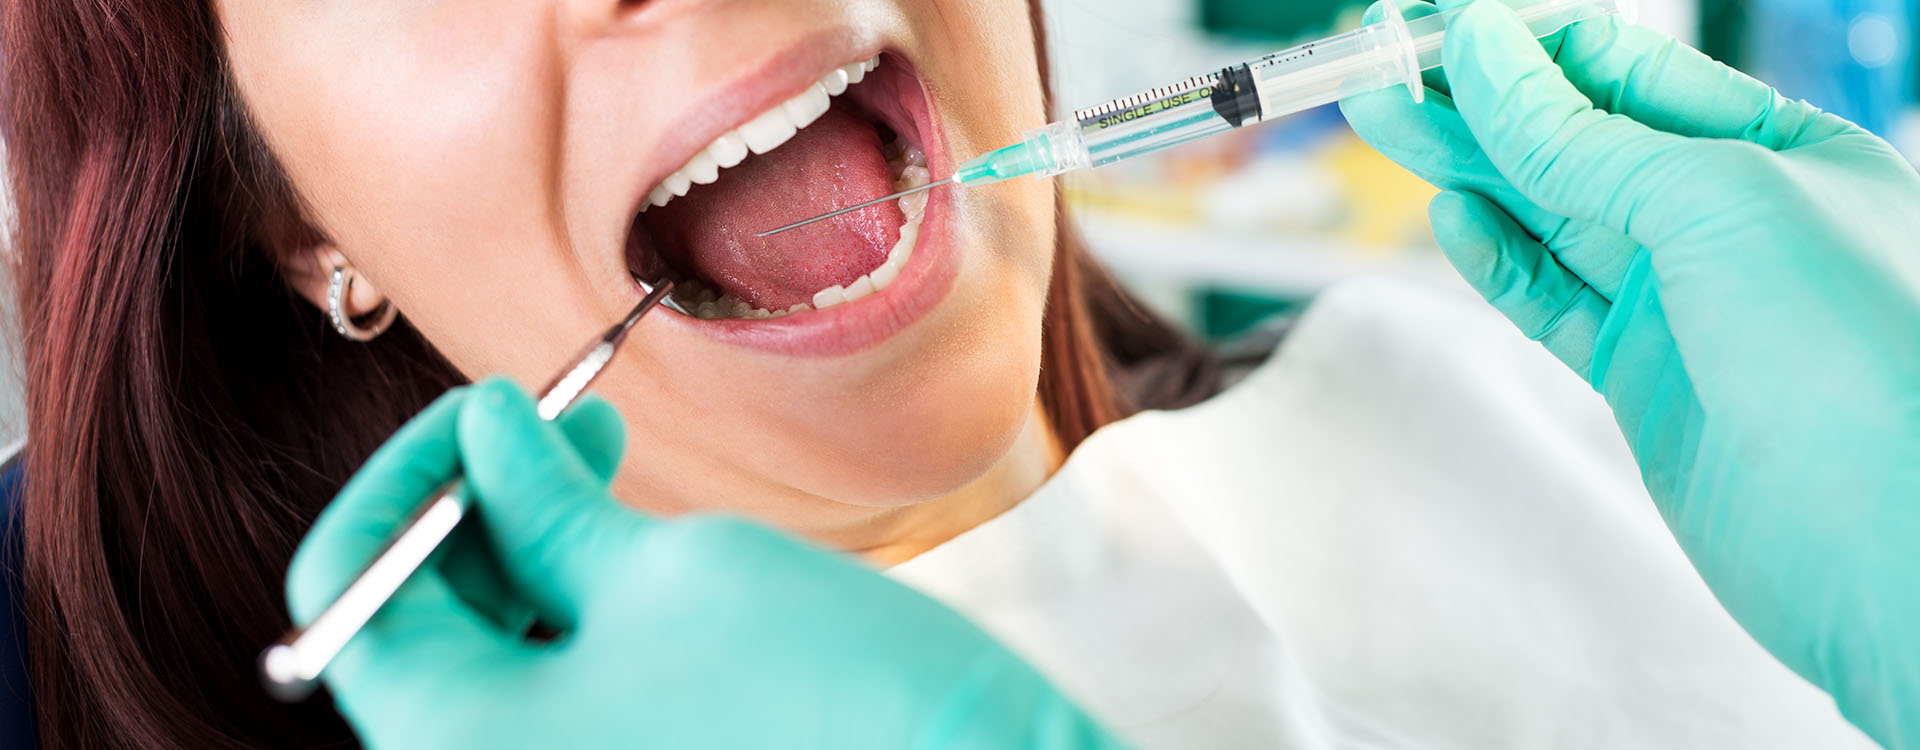 Clínica Dental Andrea Compte, tu Centro Odontológico especializado. Cirugía bucal en Cálig. Administración de anestesia a la paciente antes de la cirugía.